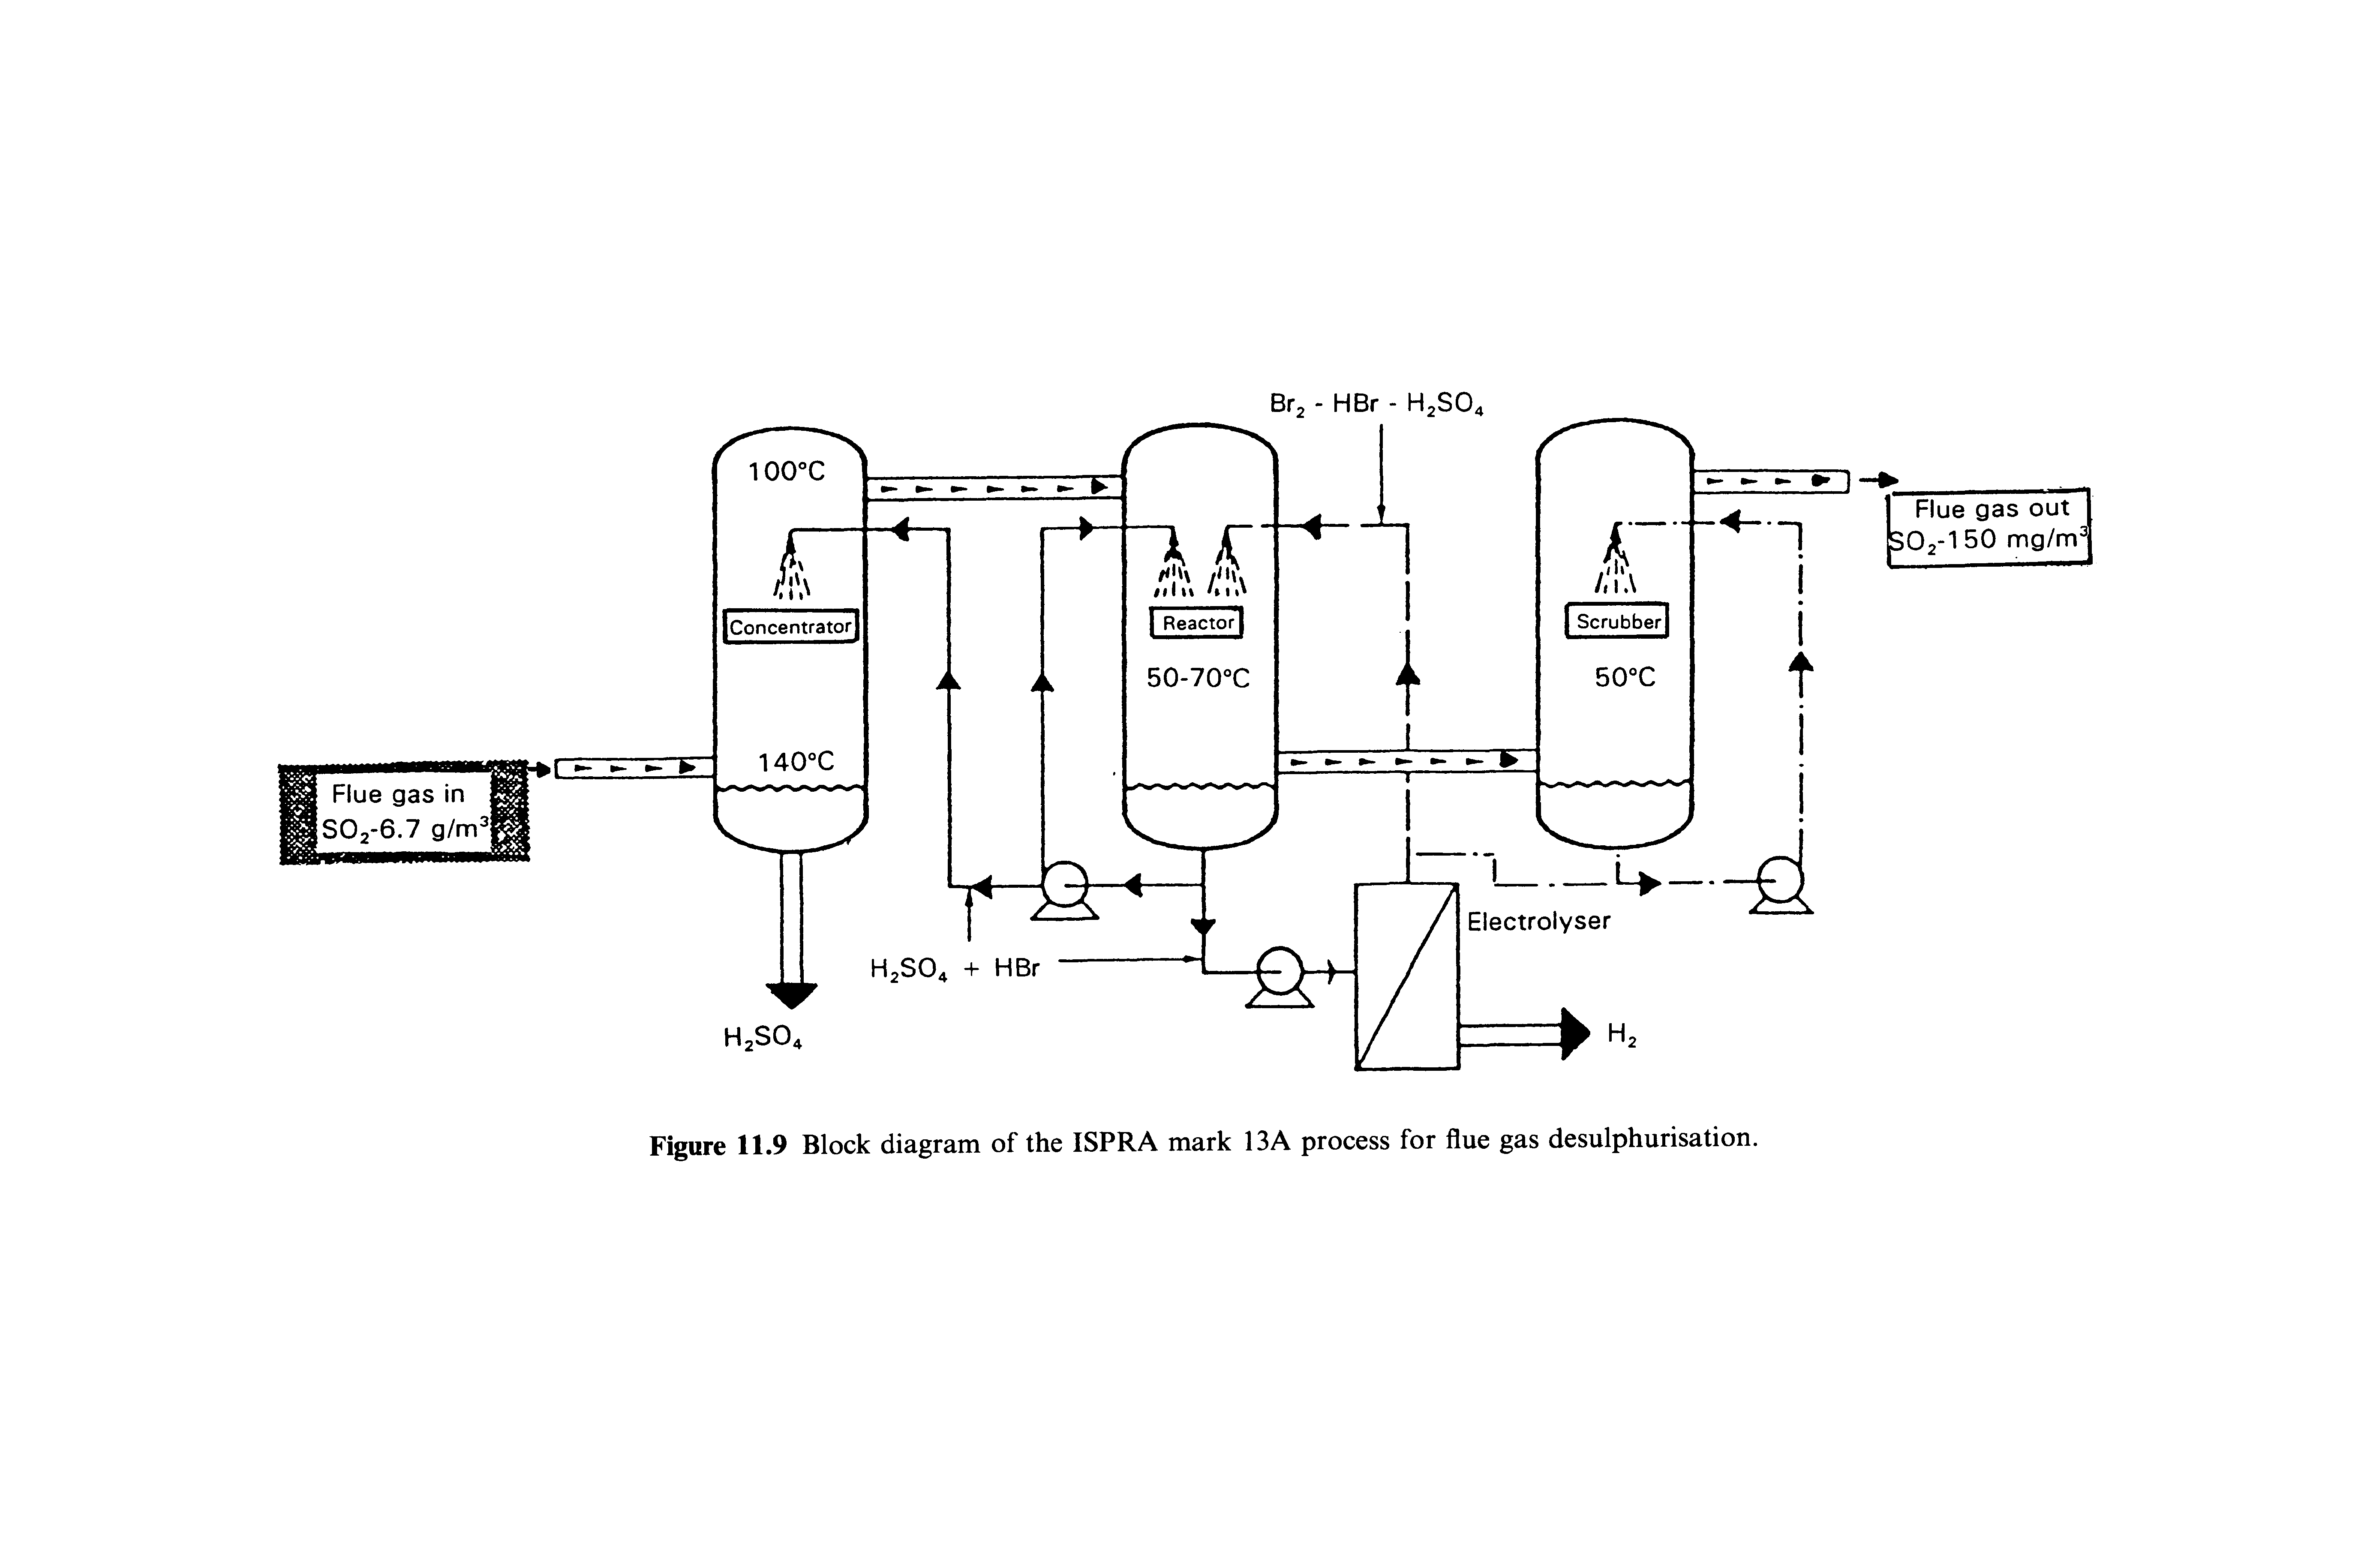 Figure 11.9 Block diagram of the ISPRA mark 13A process for flue gas desulphurisation.